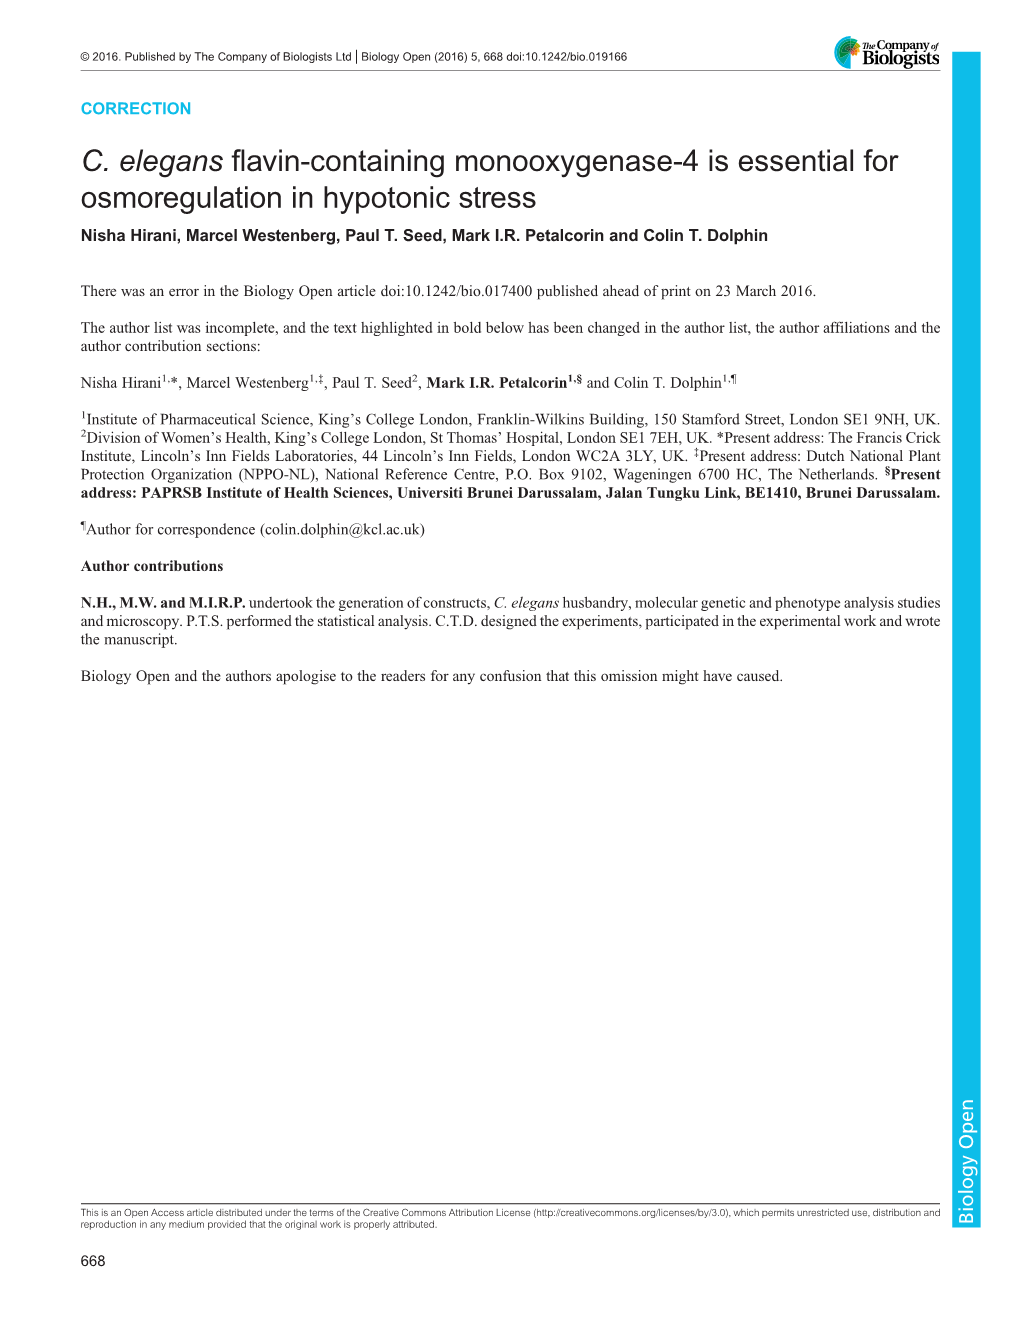 C. Elegans Flavin-Containing Monooxygenase-4 Is Essential for Osmoregulation in Hypotonic Stress Nisha Hirani, Marcel Westenberg, Paul T